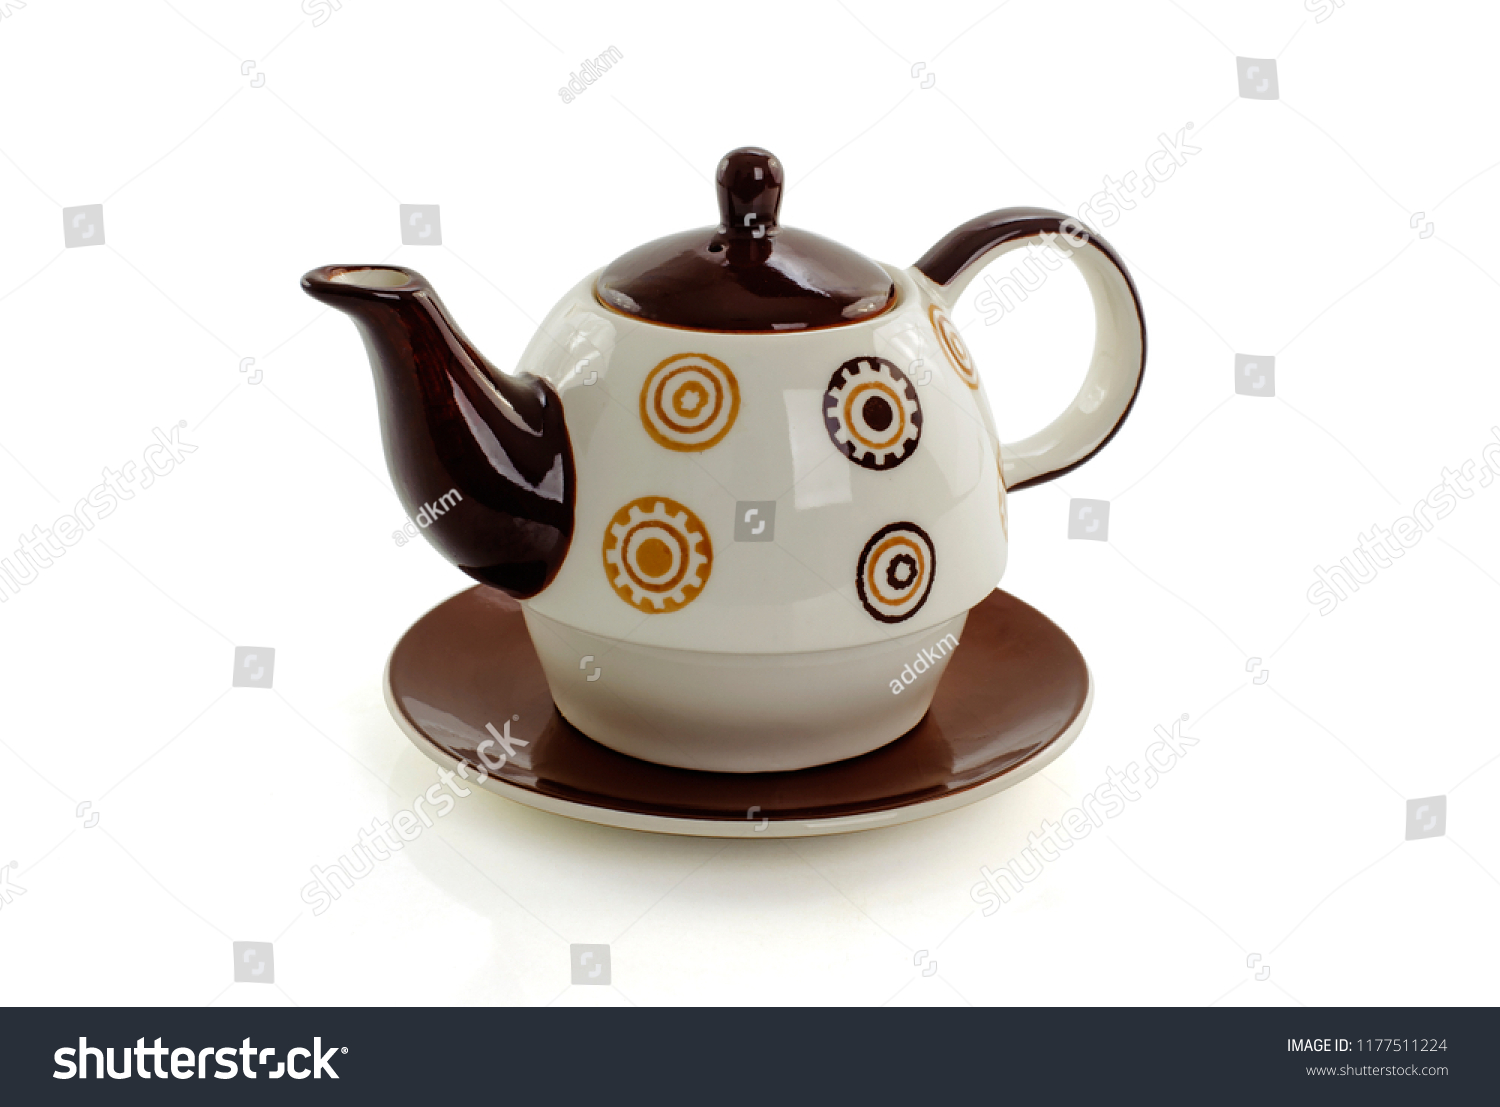 ceramic teapot isolated on white background #1177511224